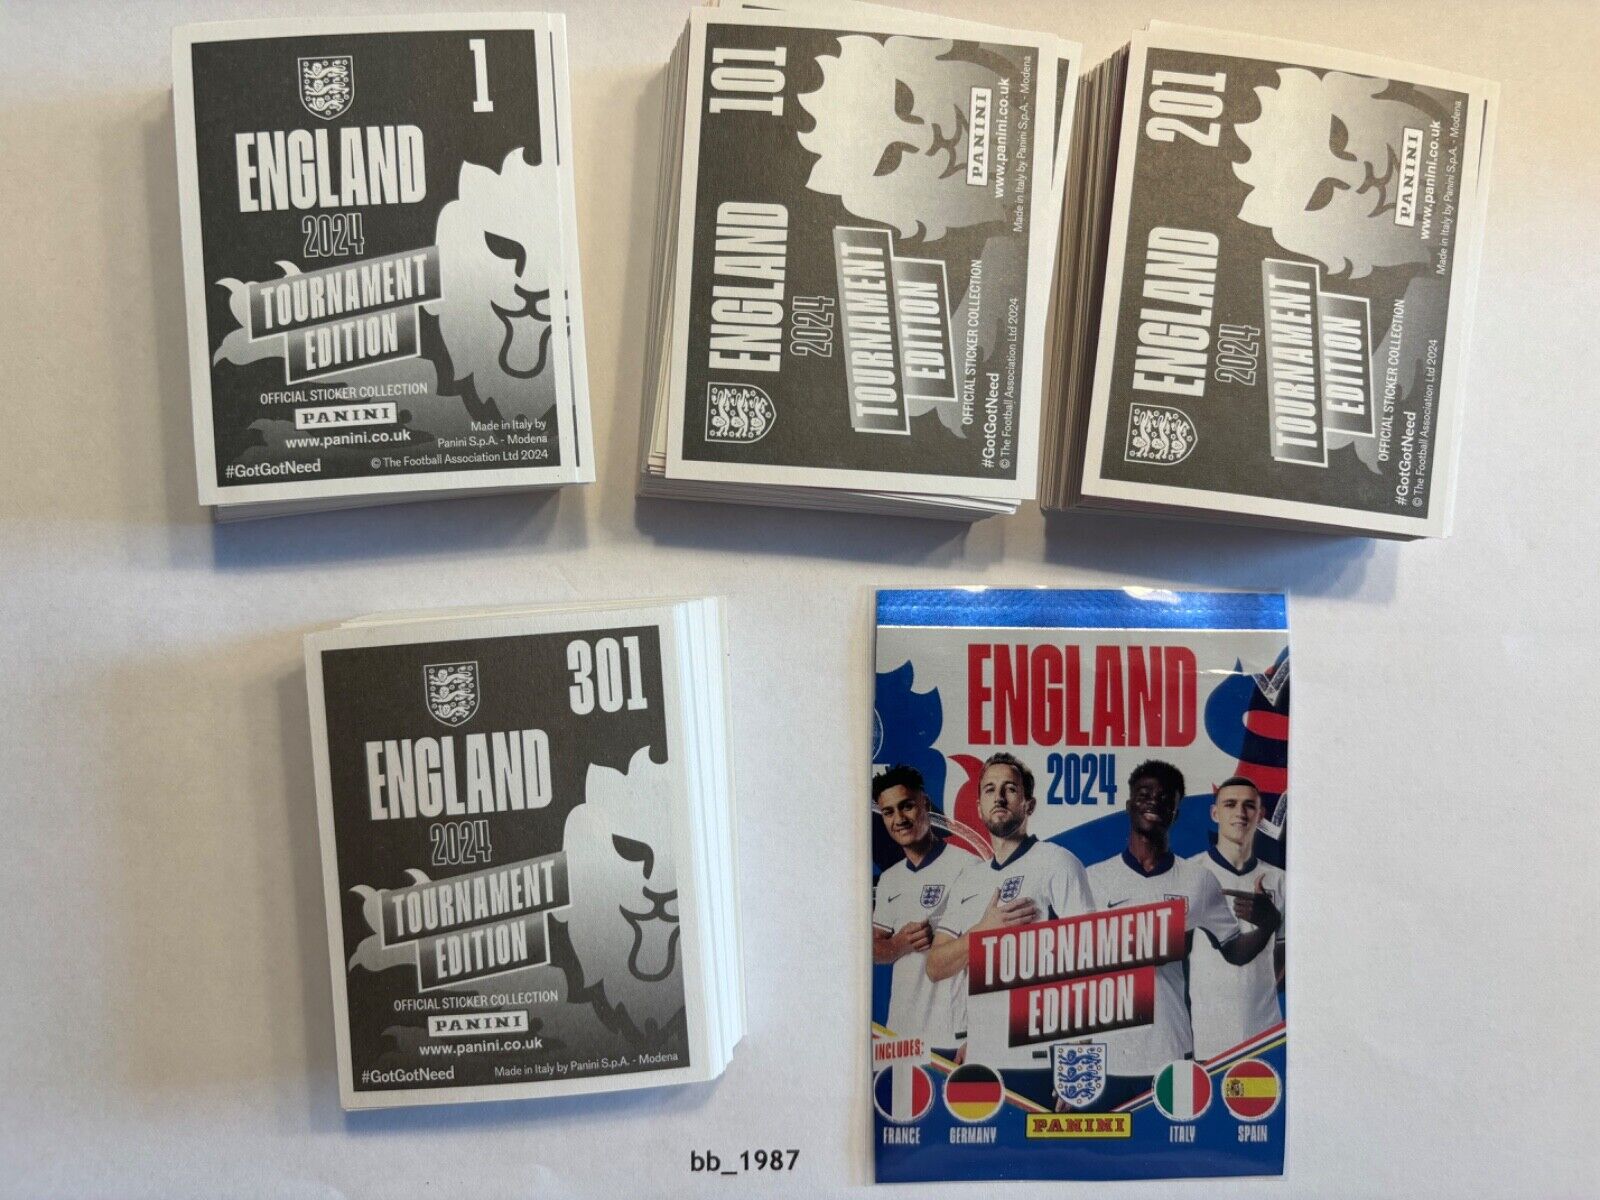 Panini - England 2024 Tournament Edition (24) - Base / Foil / Shiny Sticker